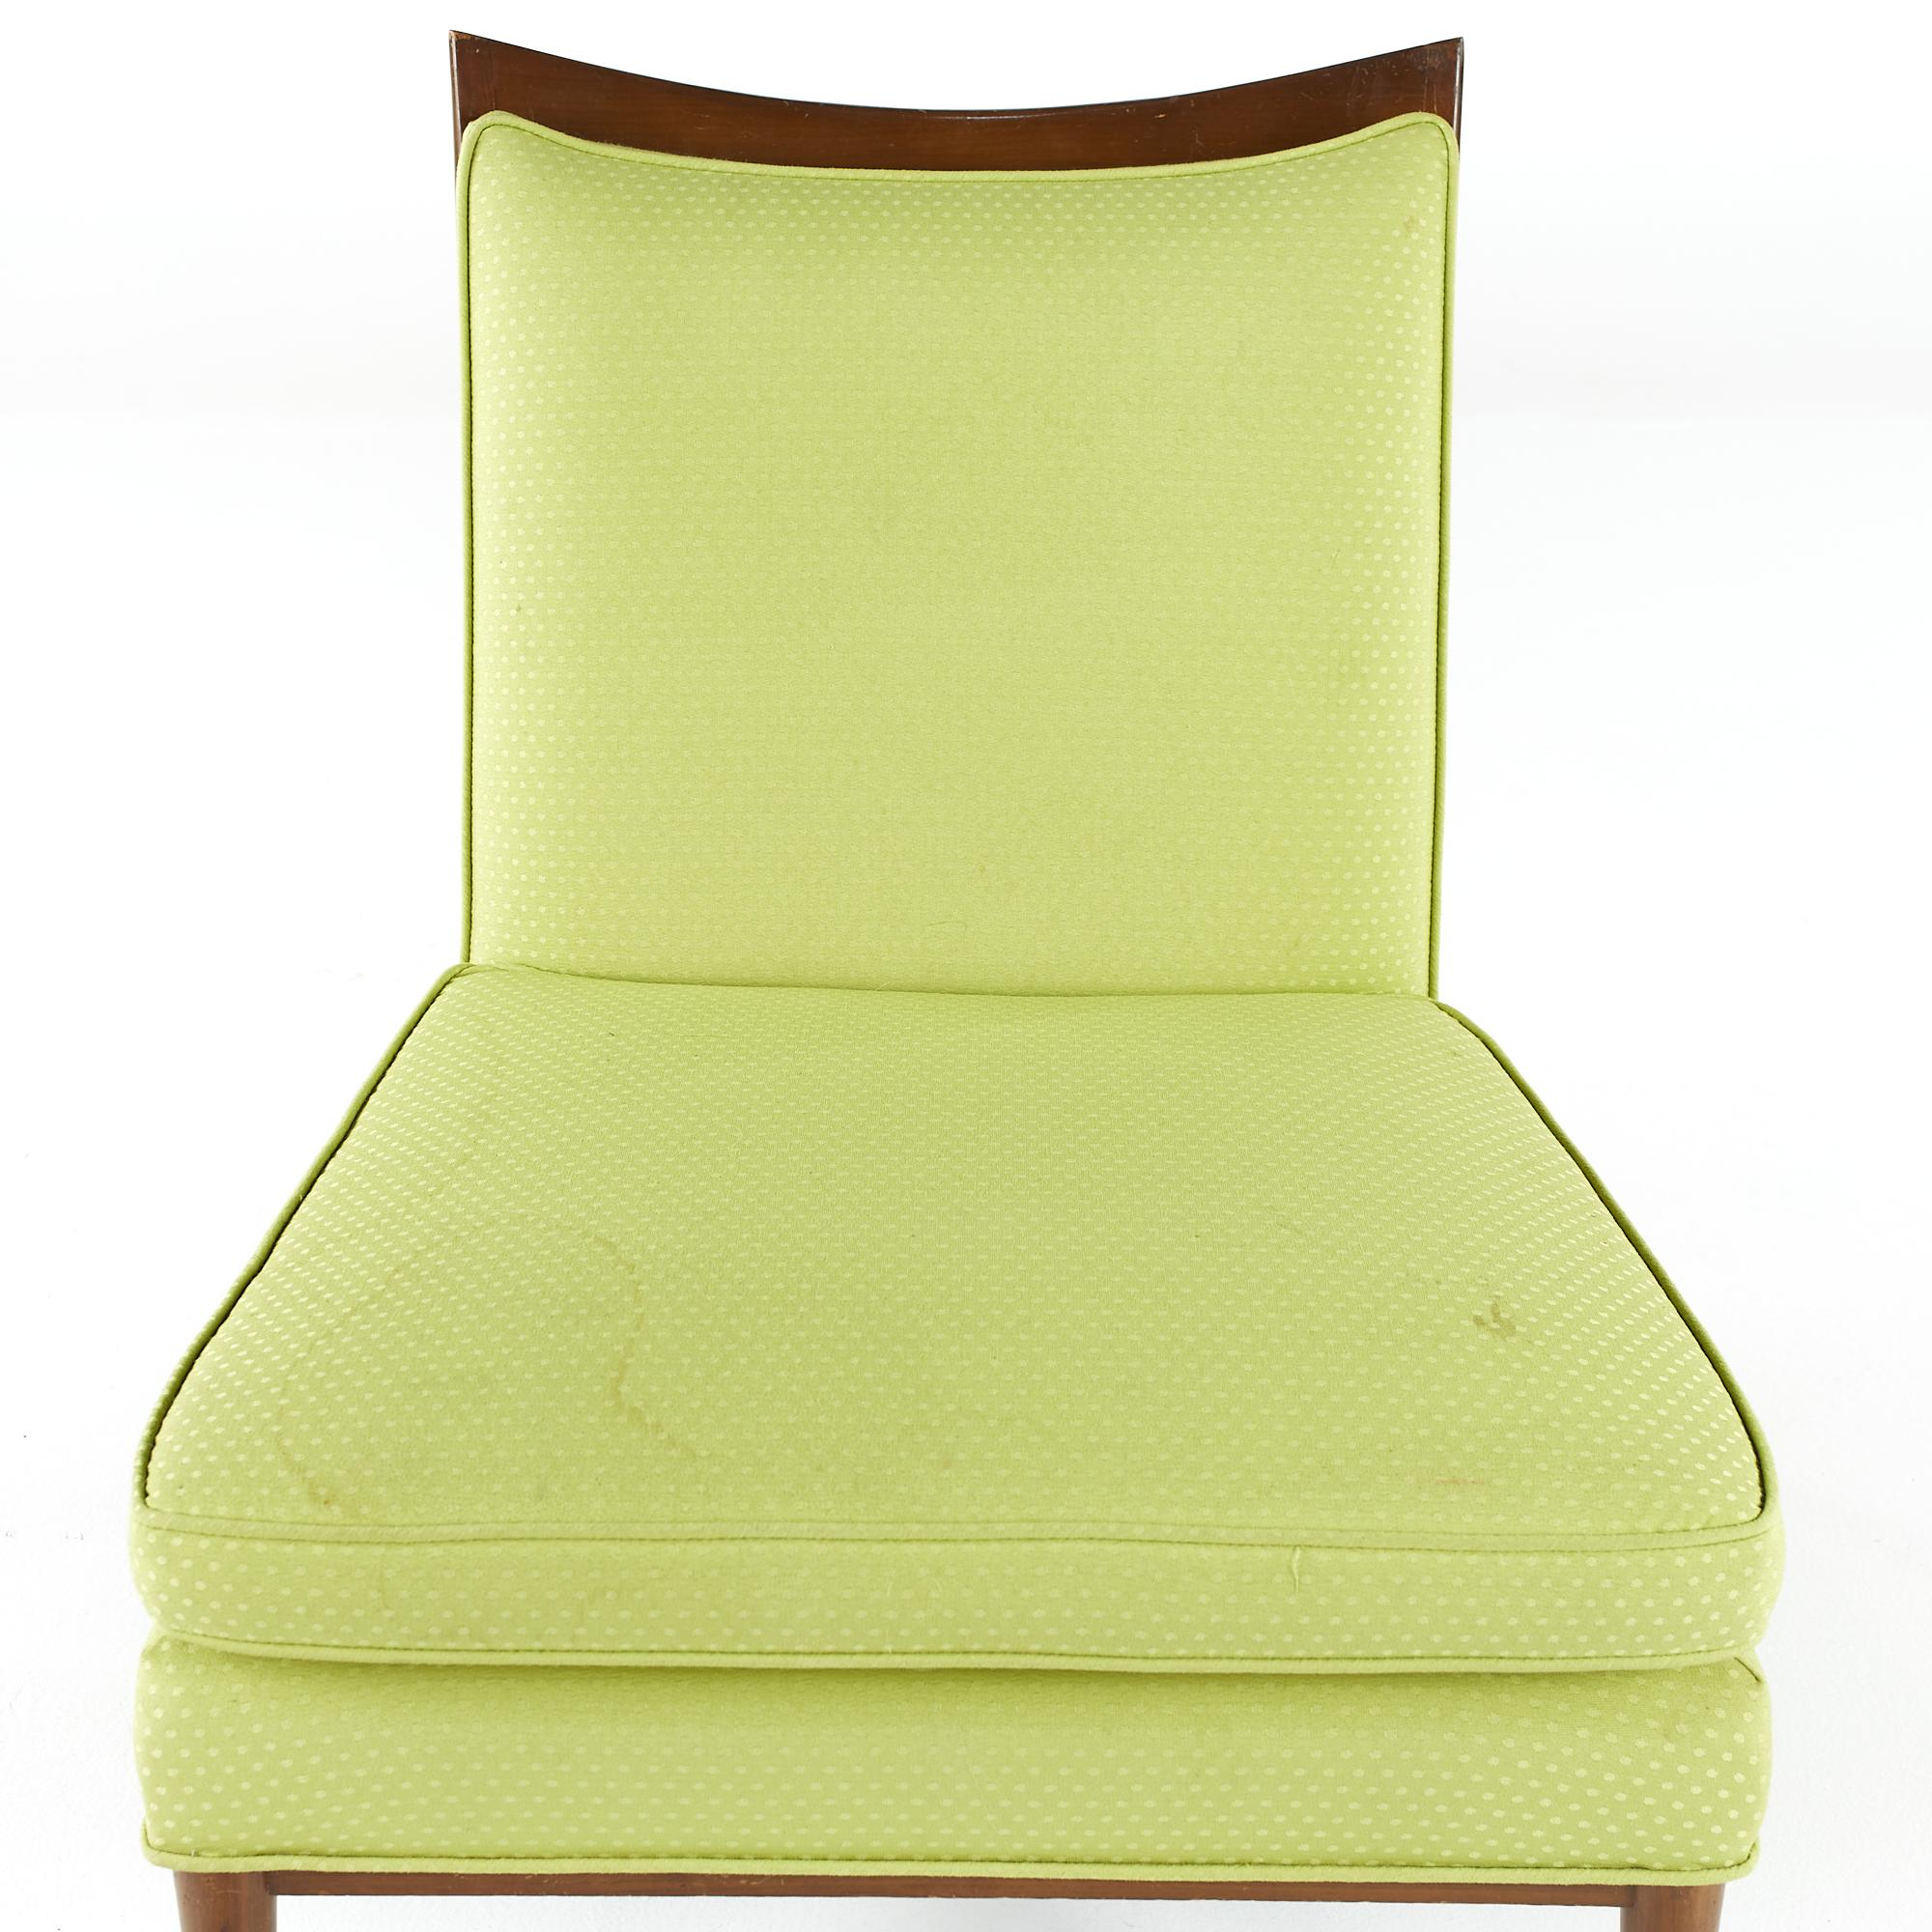 Paul McCobb for Directional Midcentury Slipper Chair For Sale 2